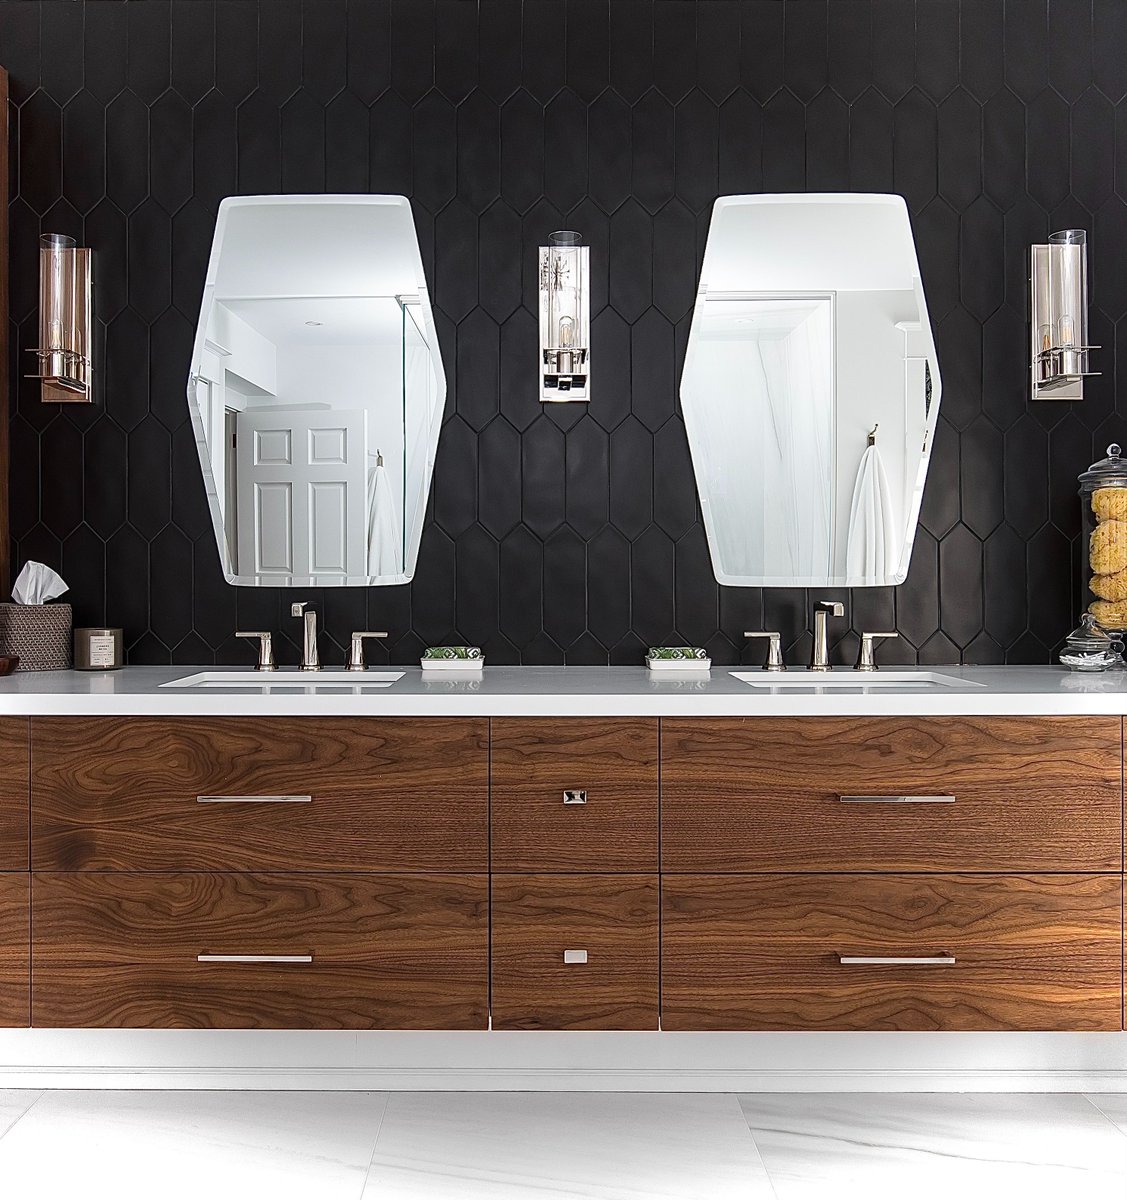 Dark, rich, textured and so striking ✨

Design: ARIM Inc.
#layered #rich #texture #striking #bathroomdesign #doublevanity #doublesink #shapes #stunning